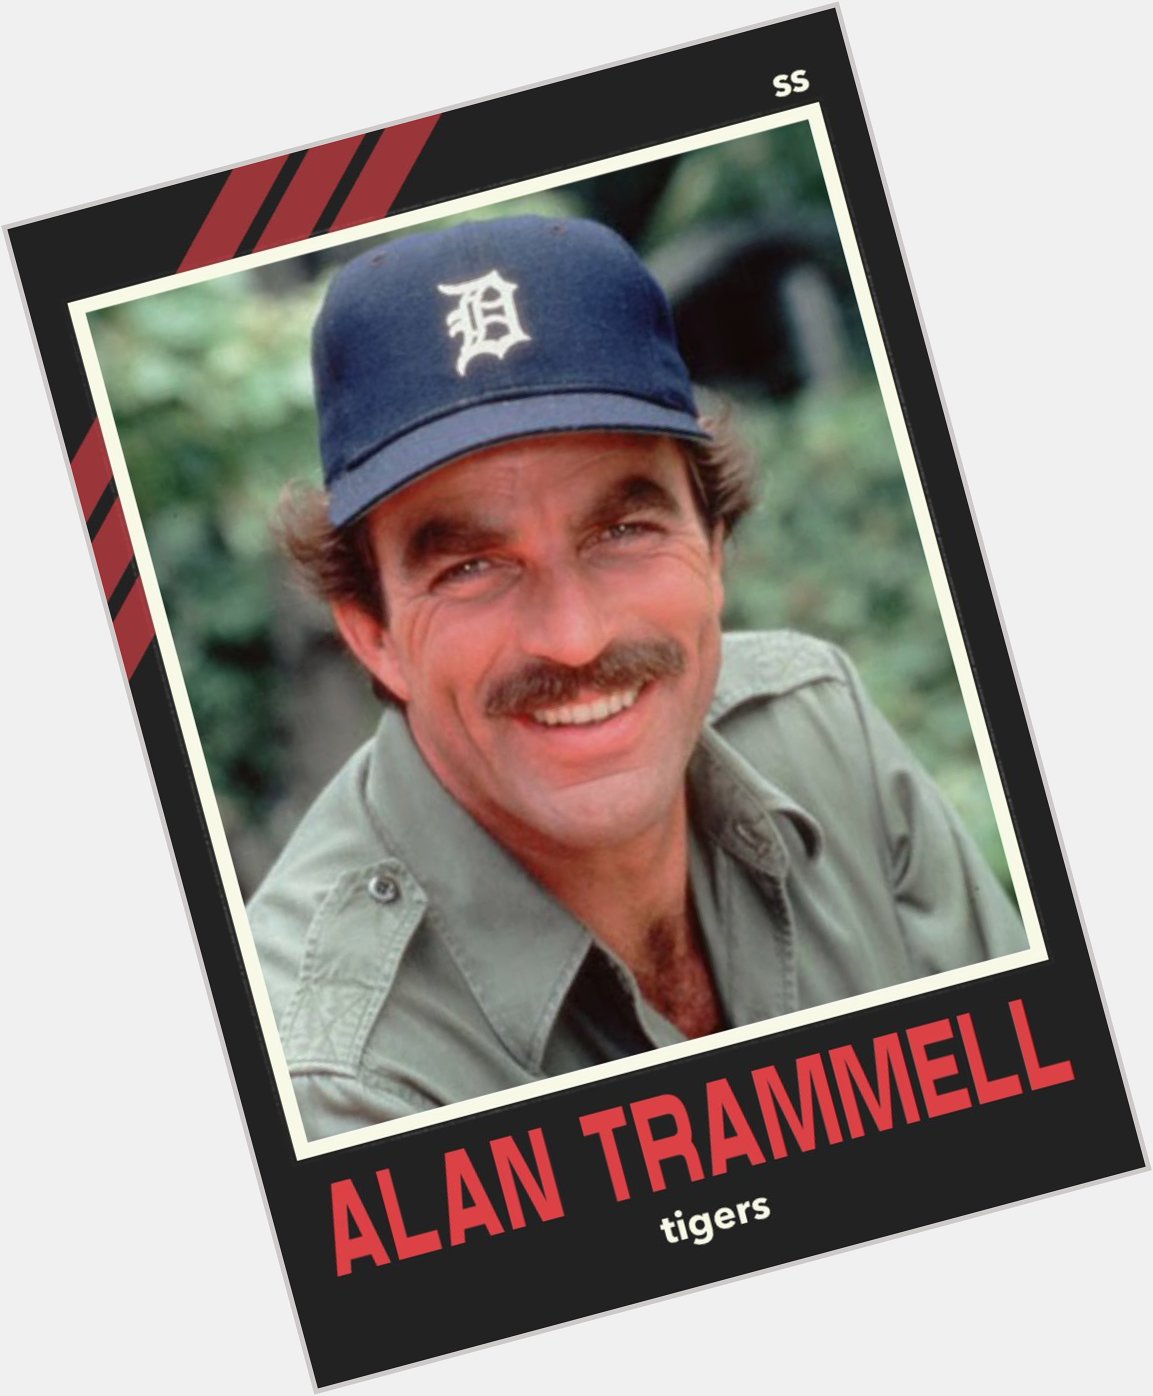 Happy 63rd birthday Alan Trammell. 